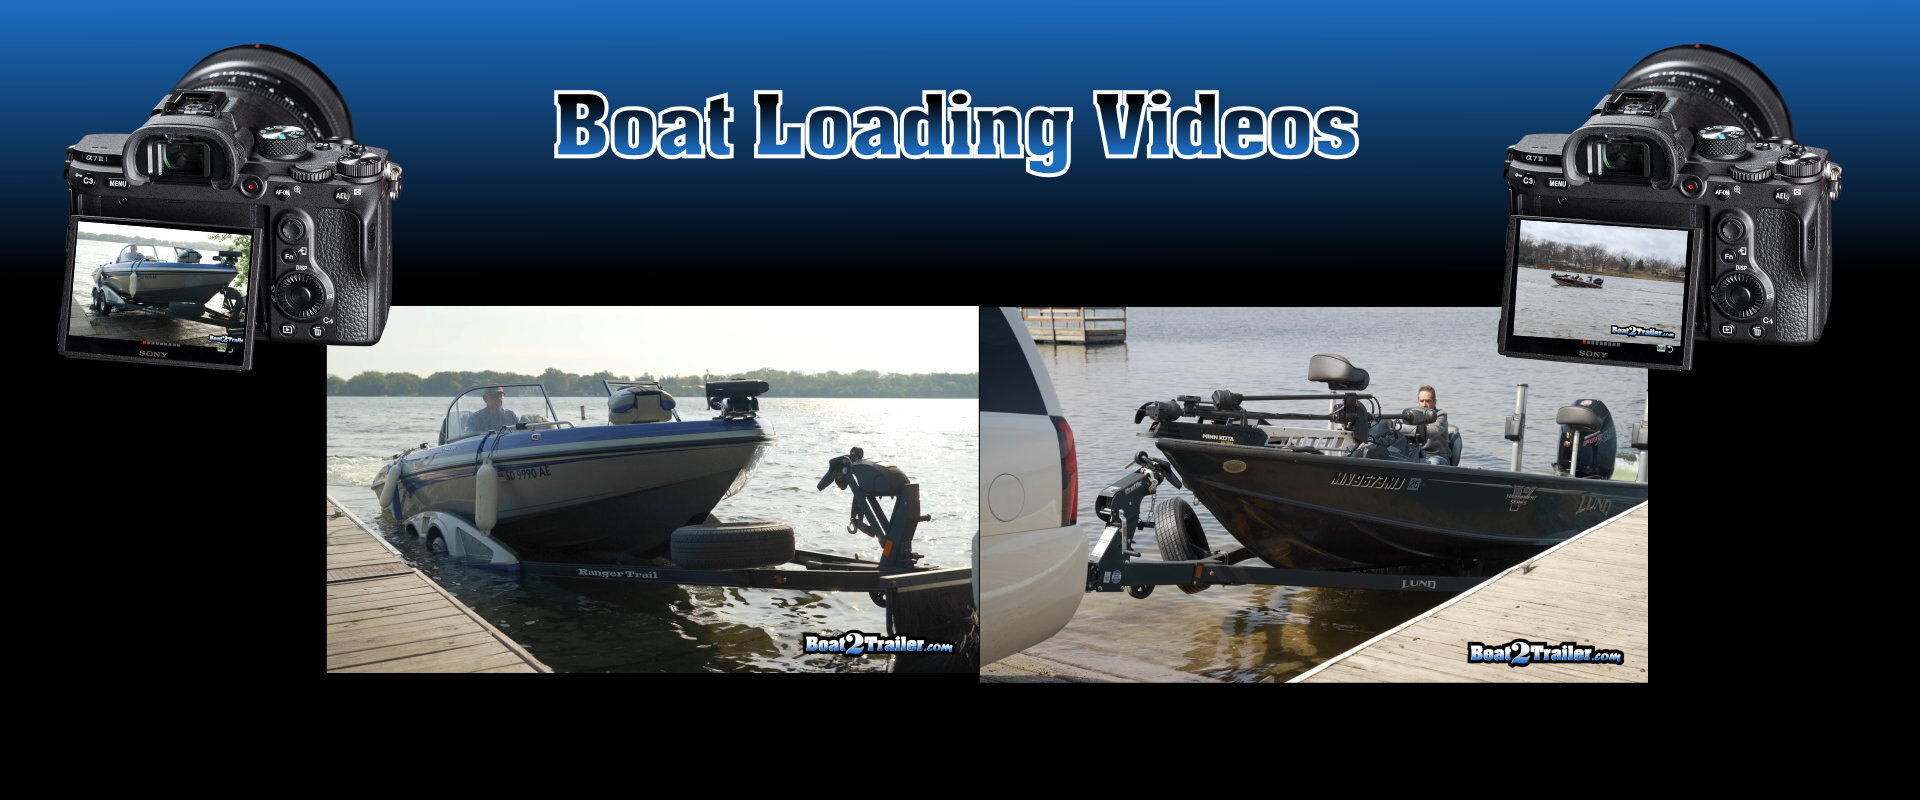 Boat Loading Videos